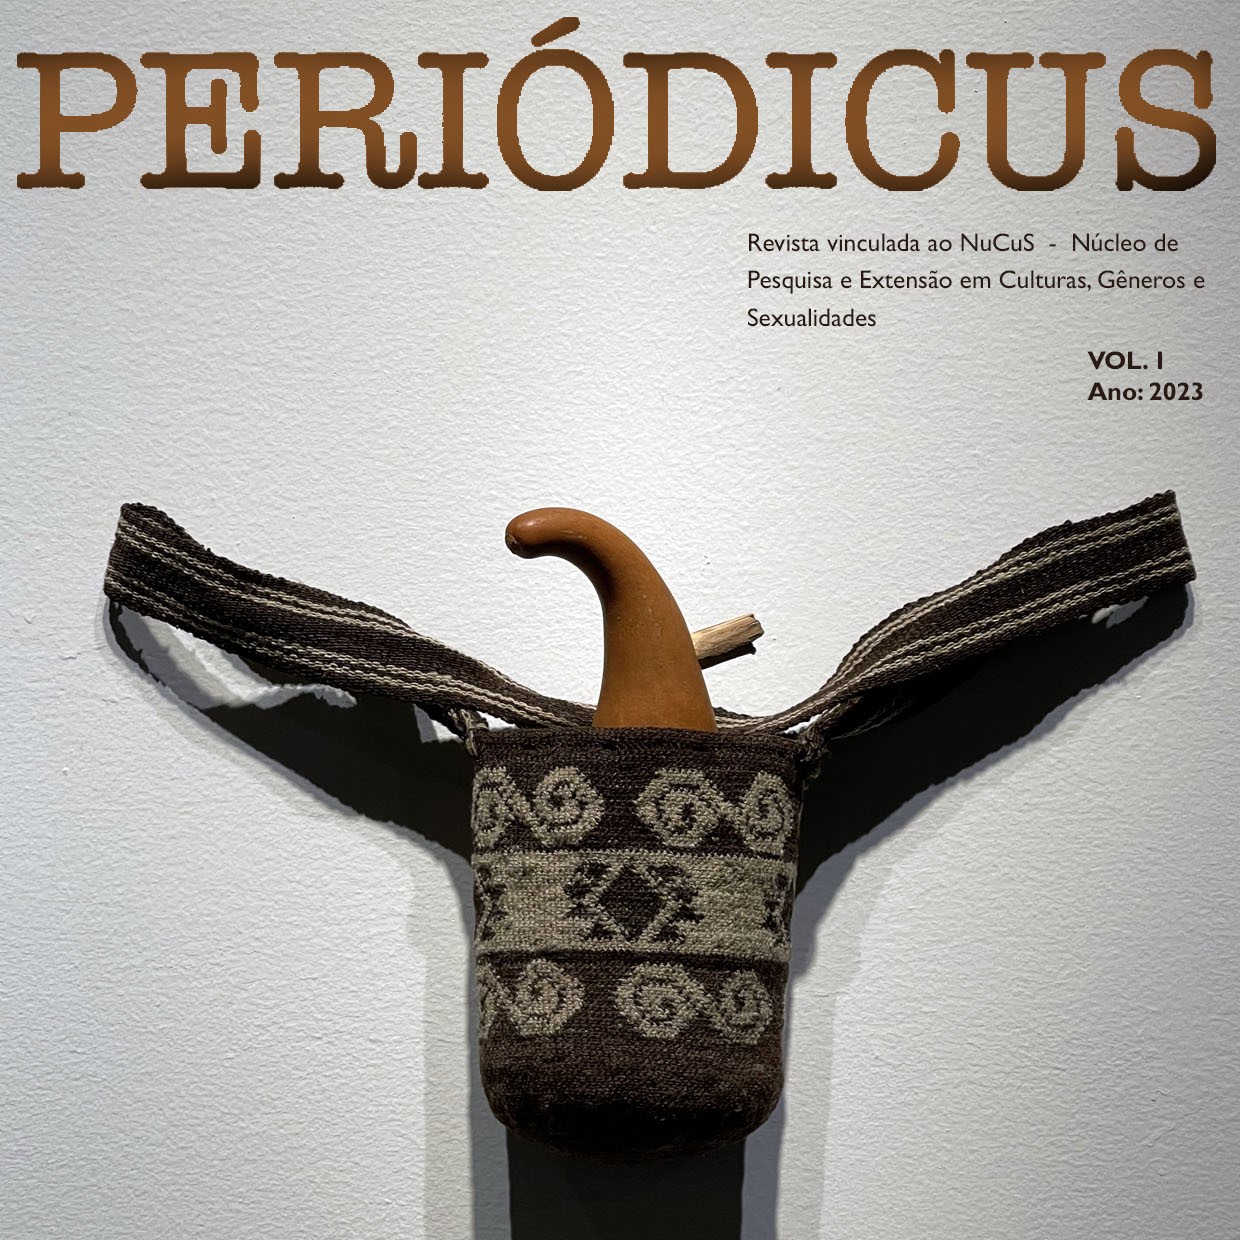 Revista Periódicus lança novo número e anuncia nova equipe de editores/as